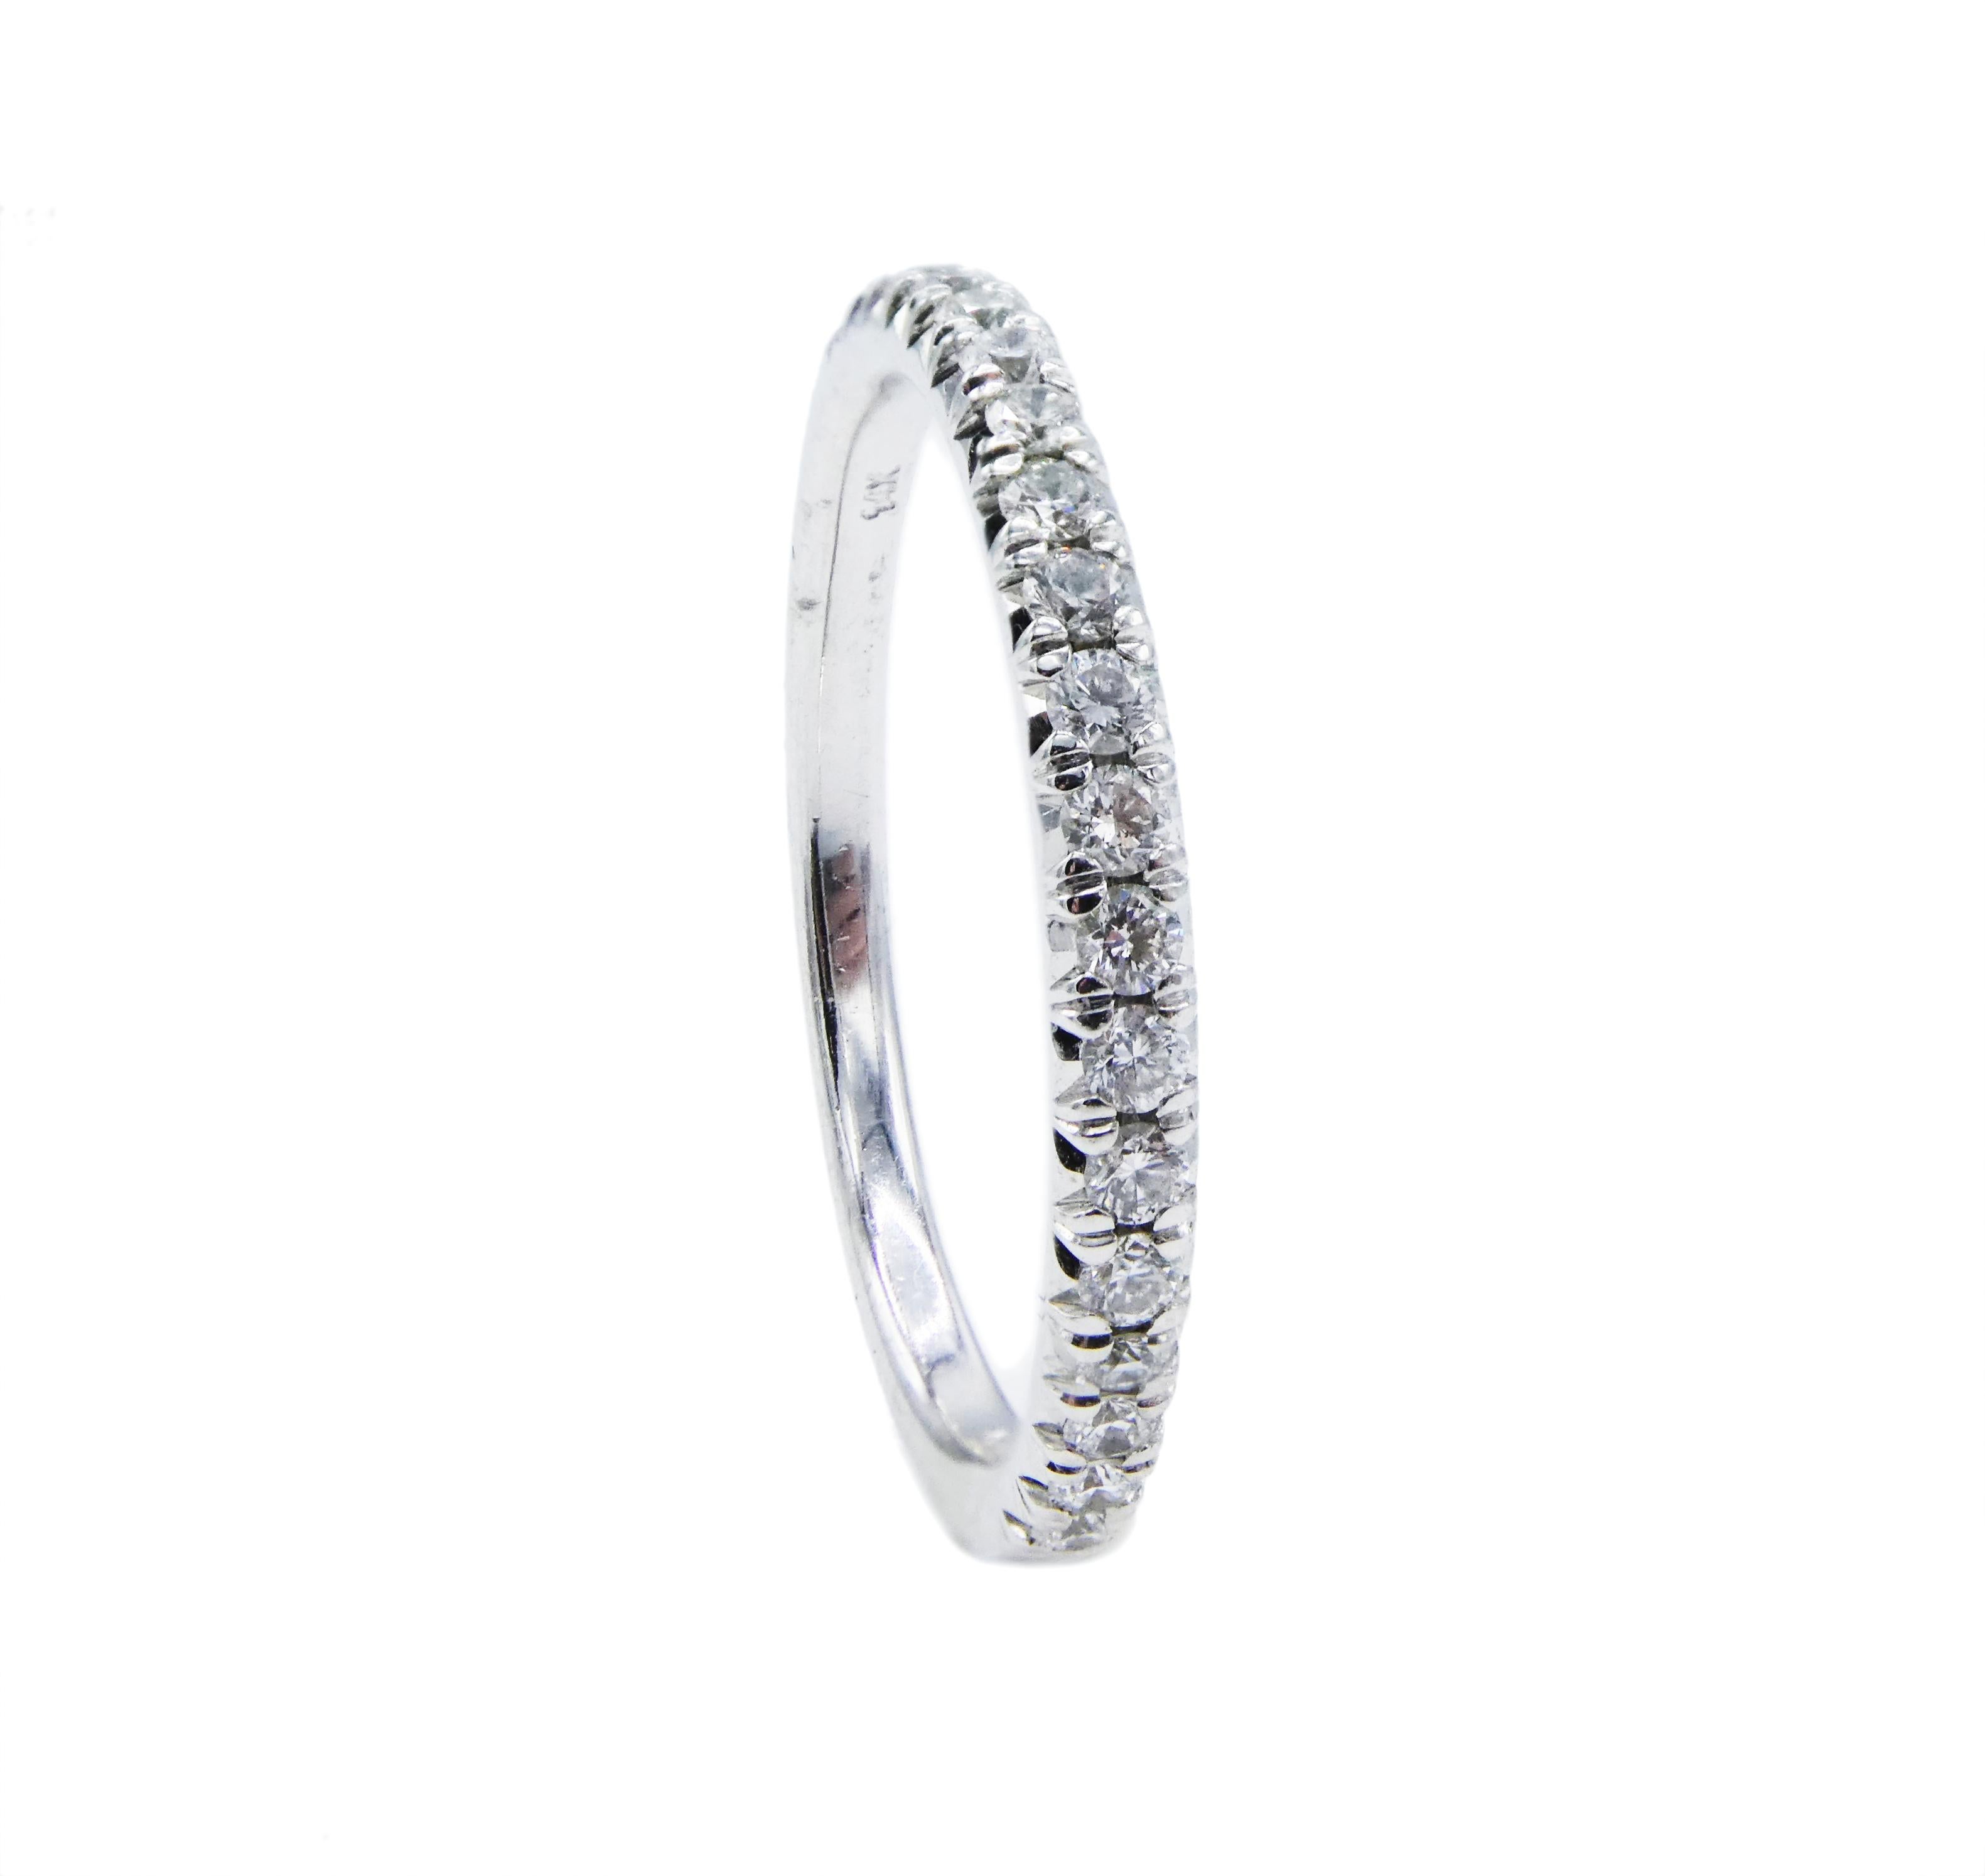 14 Karat Diamond Wedding Band 0.20 CTW White Gold Half Ring Size 6.5

Metal: 14k White Gold
Weight: 2.02 grams
Diamonds: 19 round brilliant cut diamonds, approx. .20 CTW G SI
Size: 6.5 (US)
Width: 2.2MM